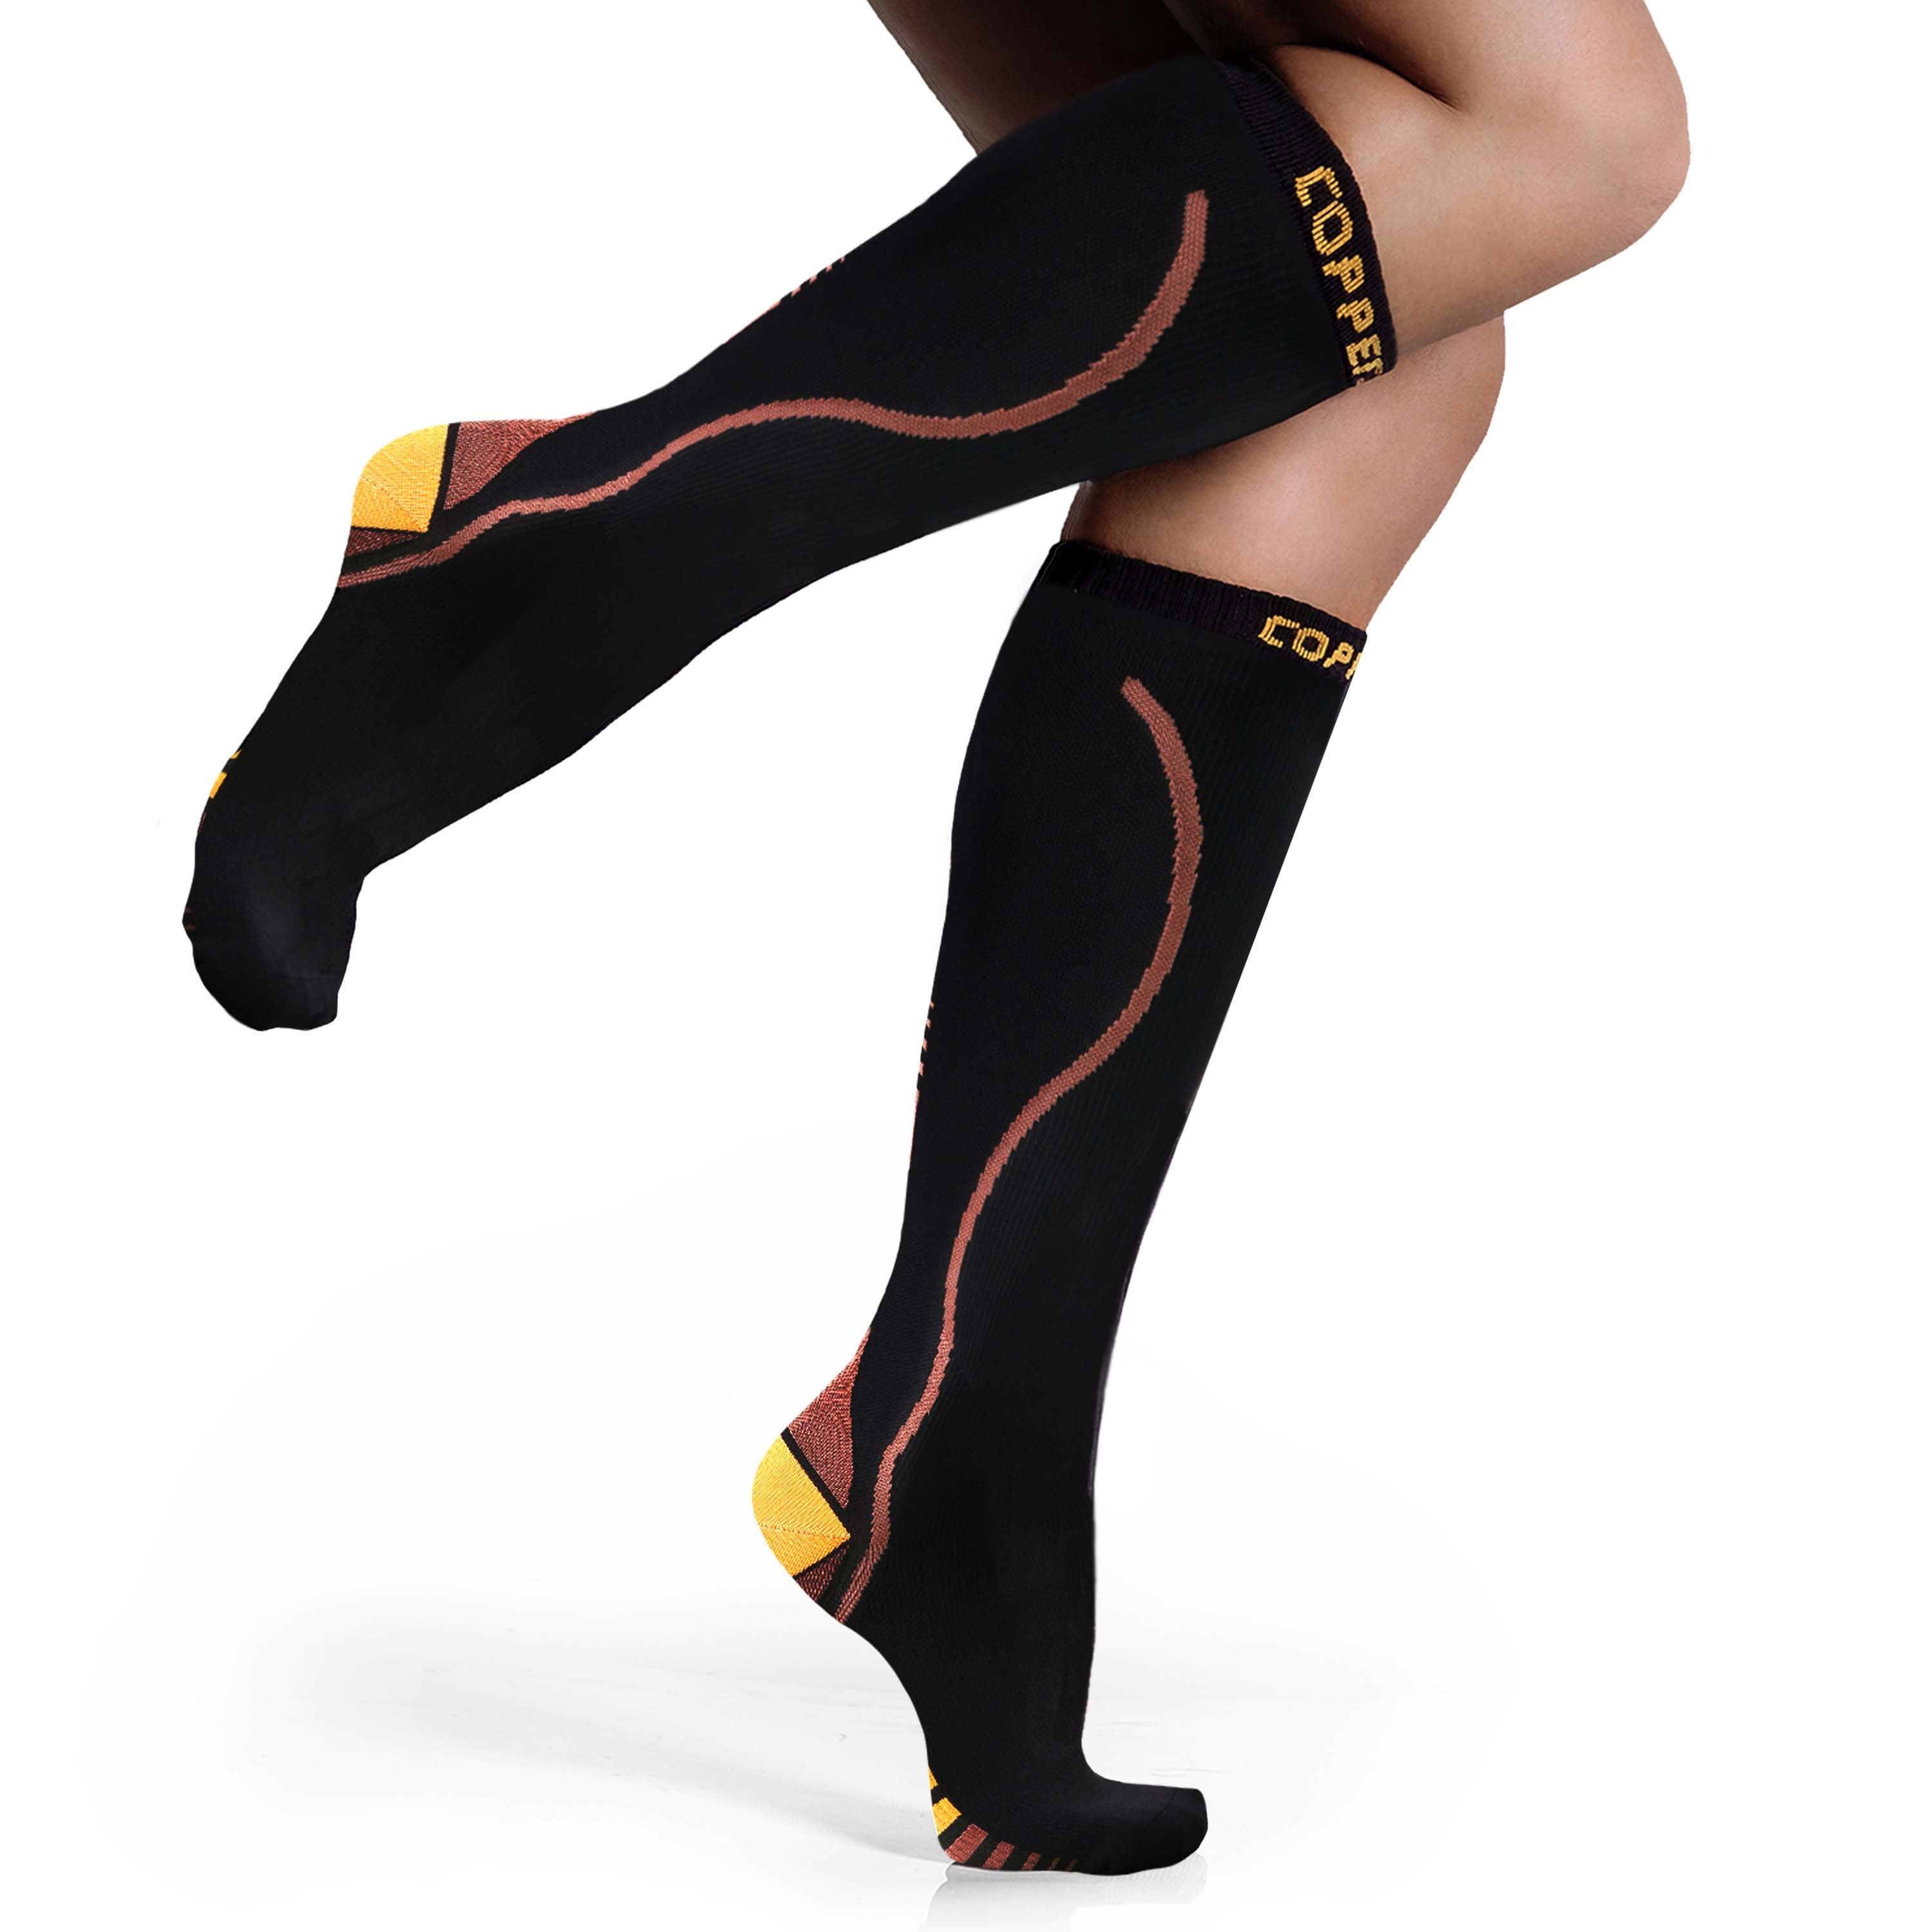 1Pair Copper Compression Socks for Women & Men Circulation 15-20 mmHg -  Best Support for Nurses, Running - AliExpress